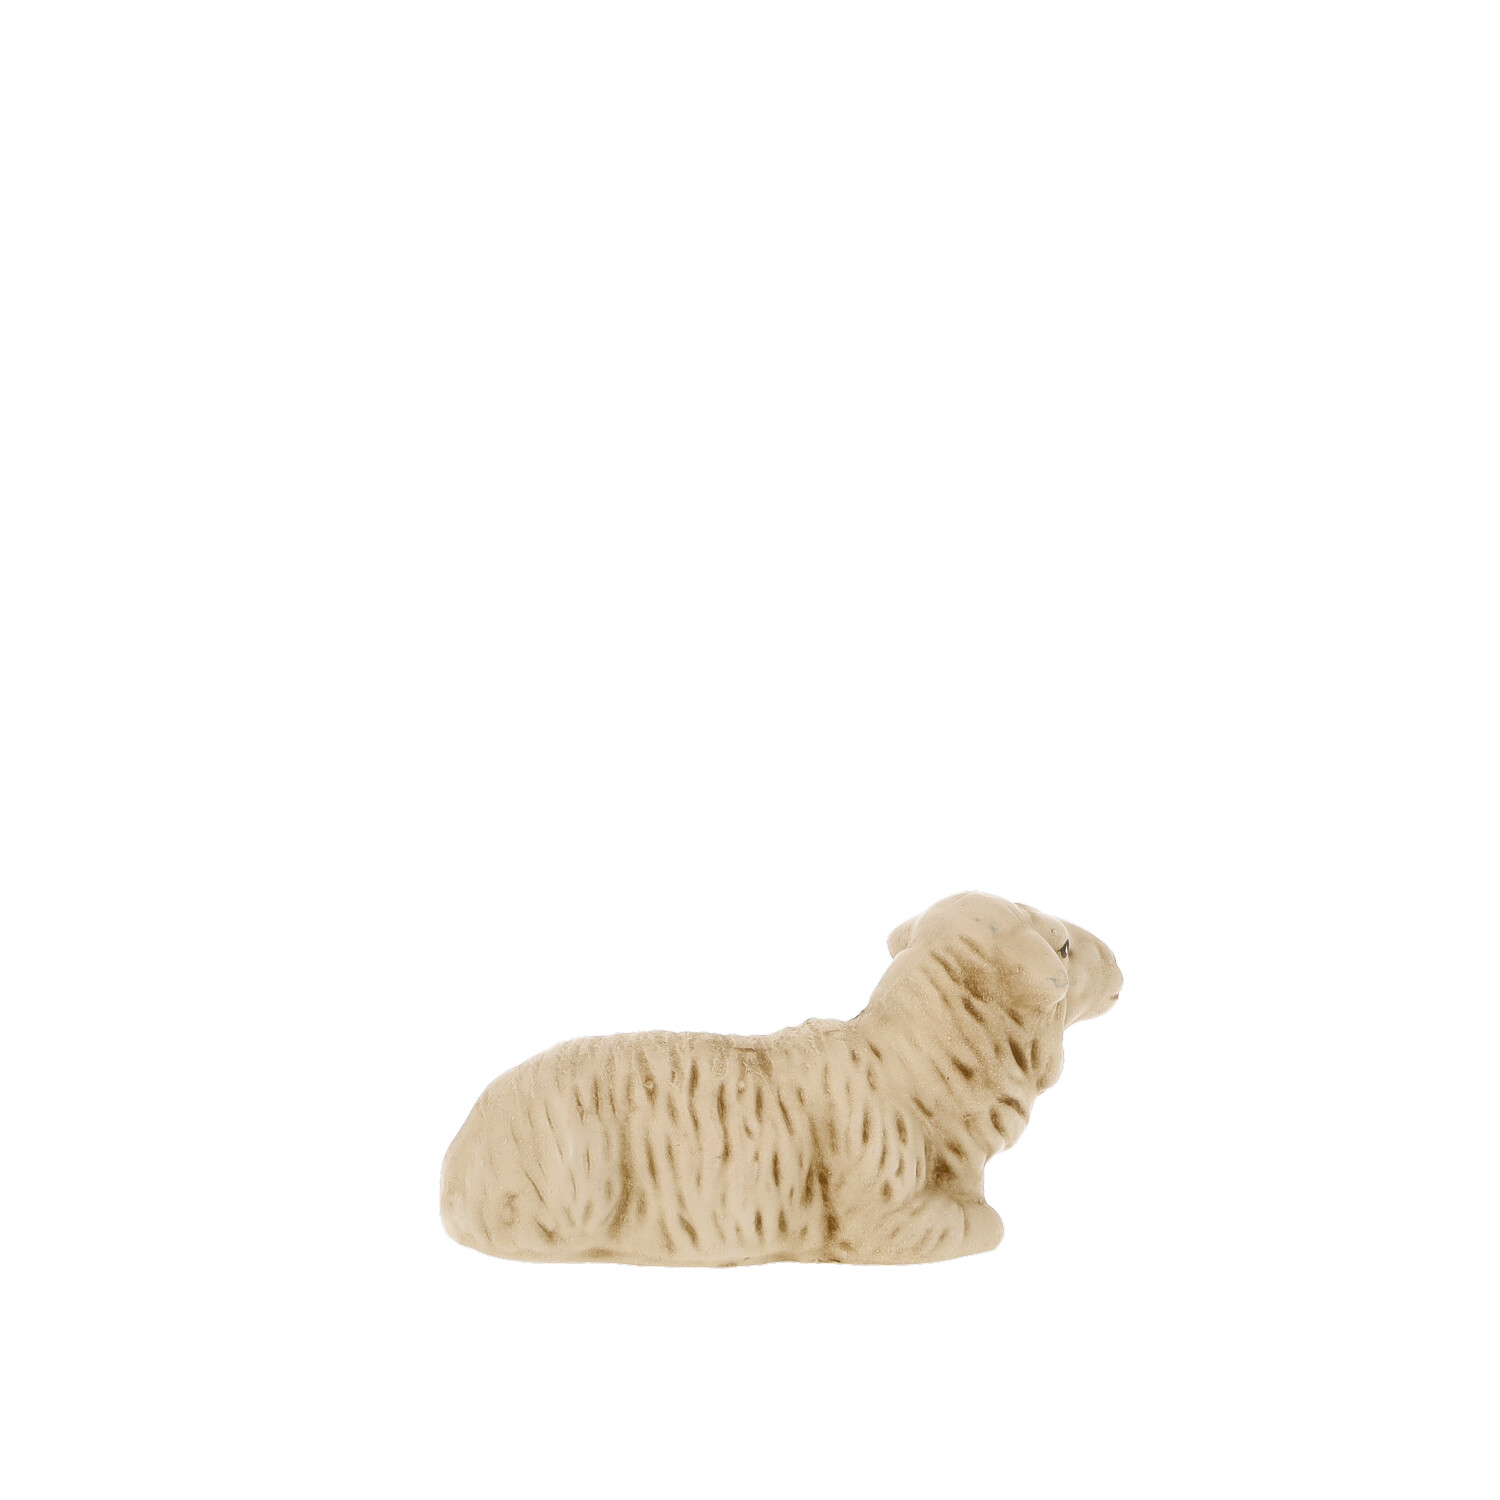 Schaf liegend, zu 14cm Figuren passend